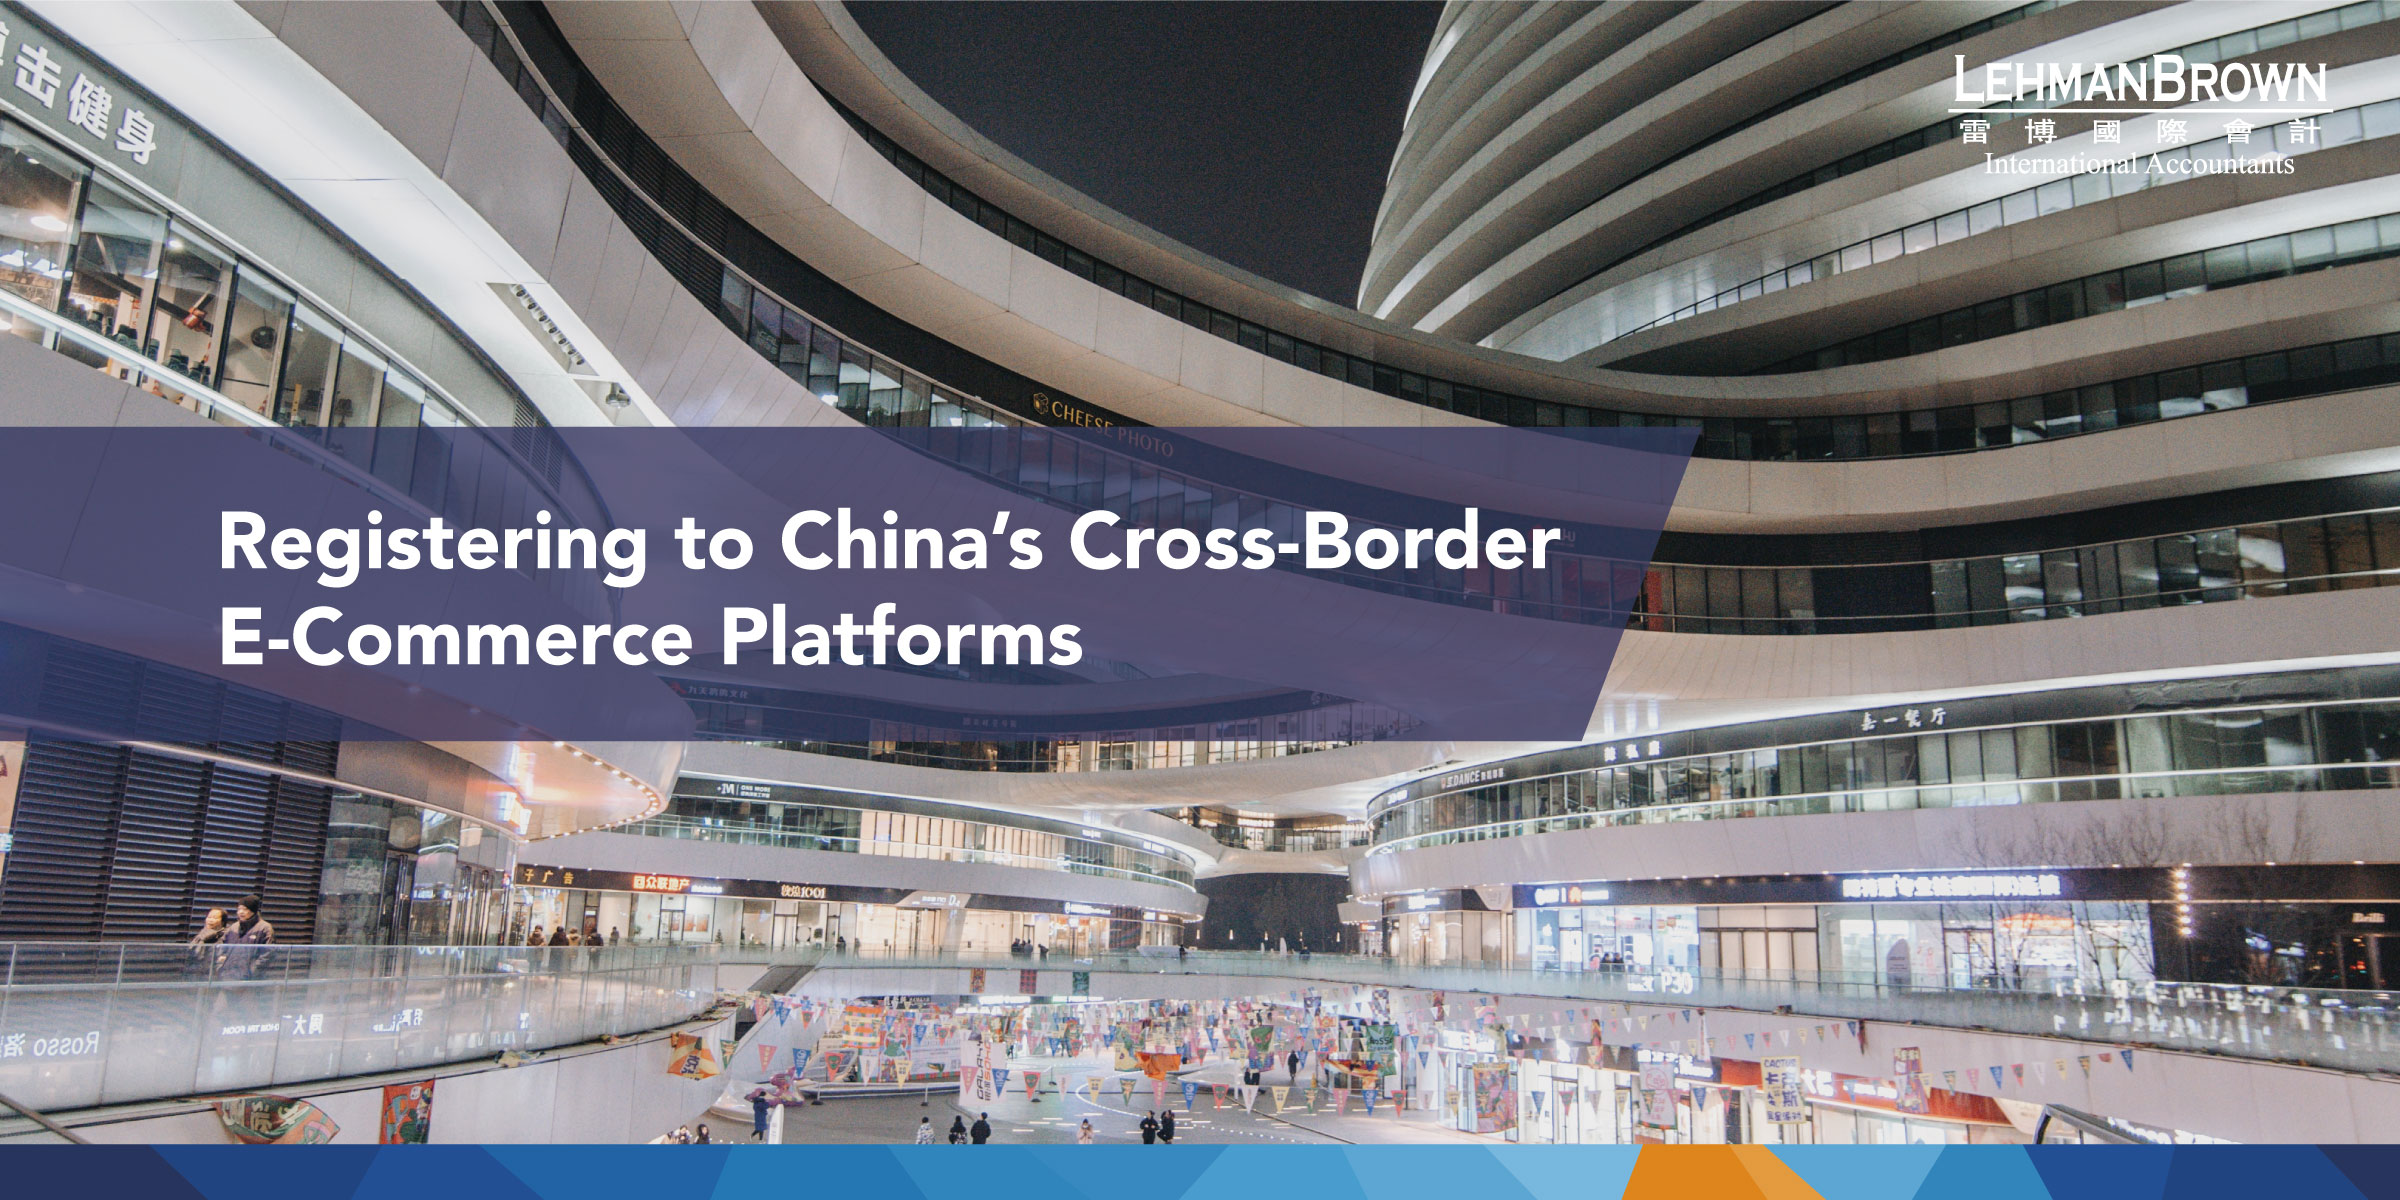 Registering to China’s CrossBorder Platforms LehmanBrown